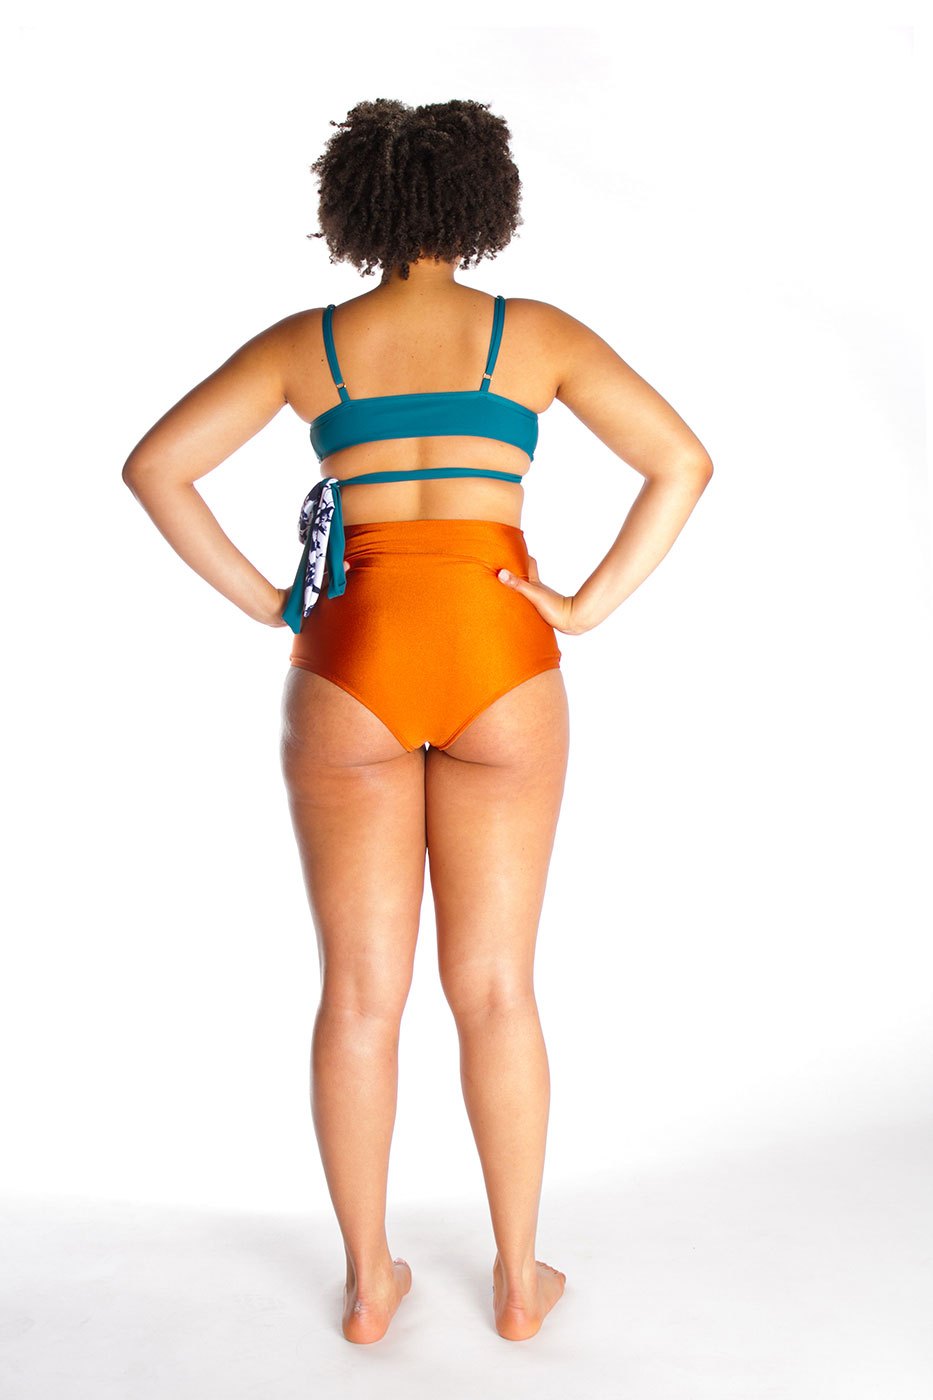 FLORENCE – Bikini high waist bottom in Bronze orange - Selfish swimwear Bottom